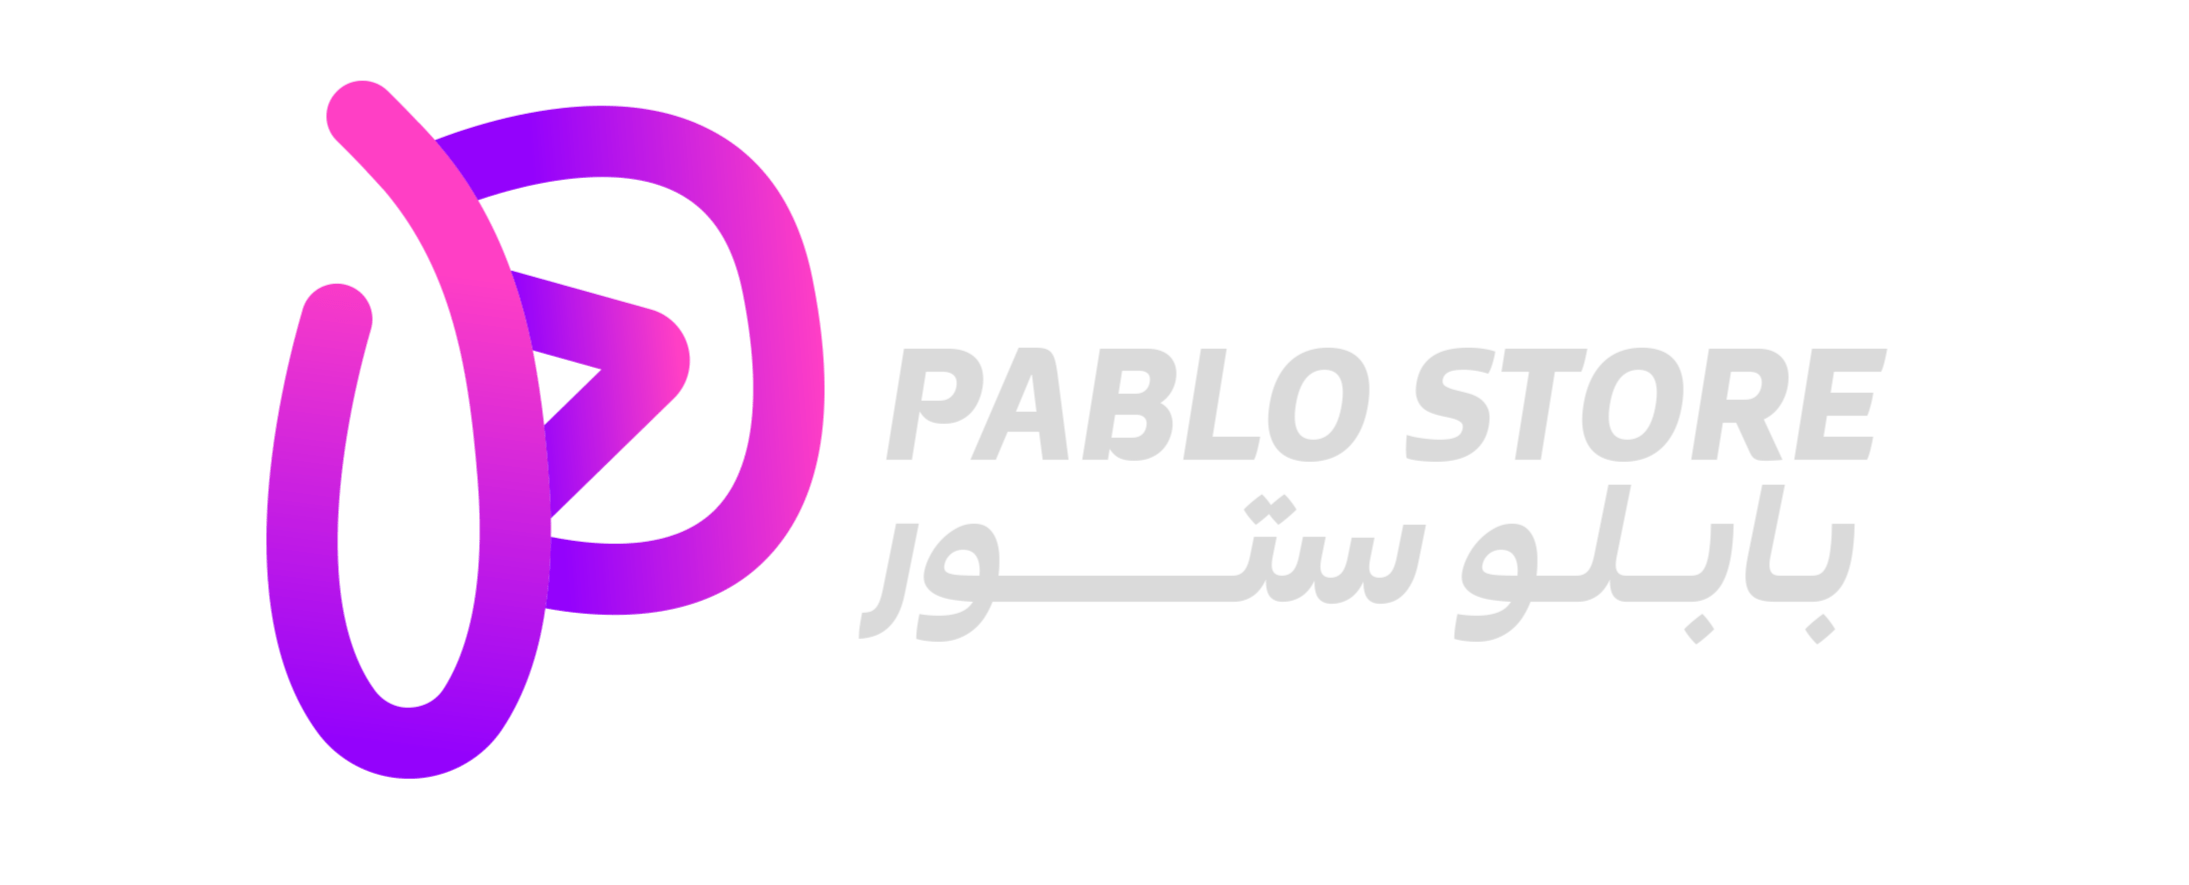 Pablo_Store